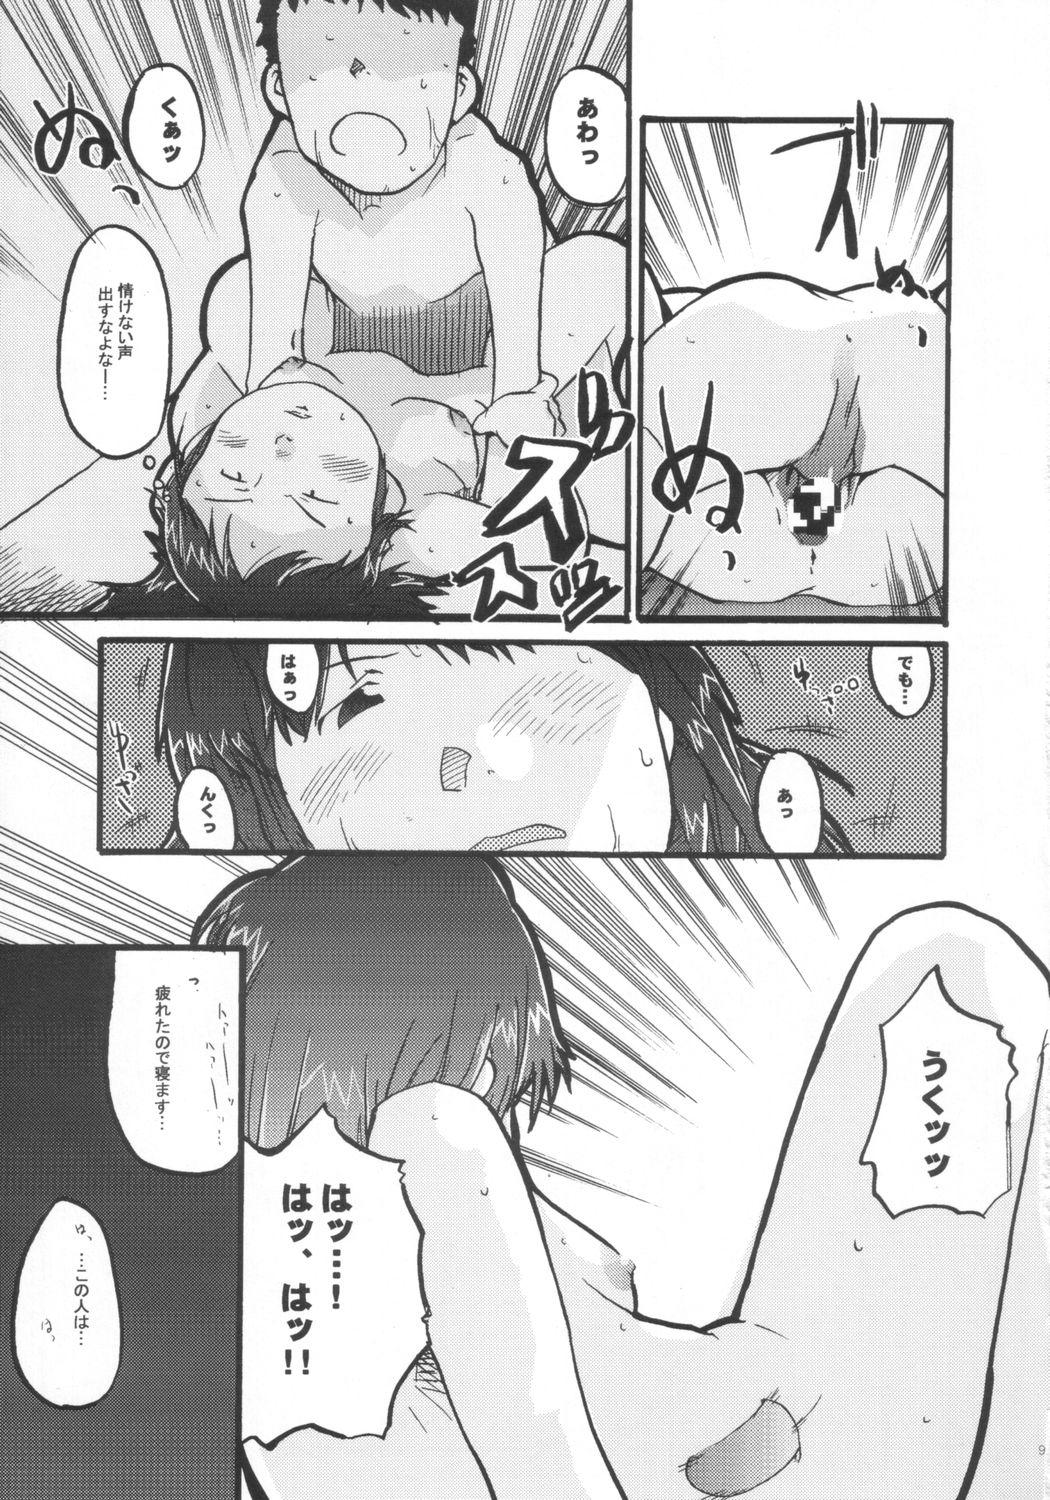 Blowing Aoi Sora Daisuki Onnanohito Motto Daisuki Caliente - Page 8